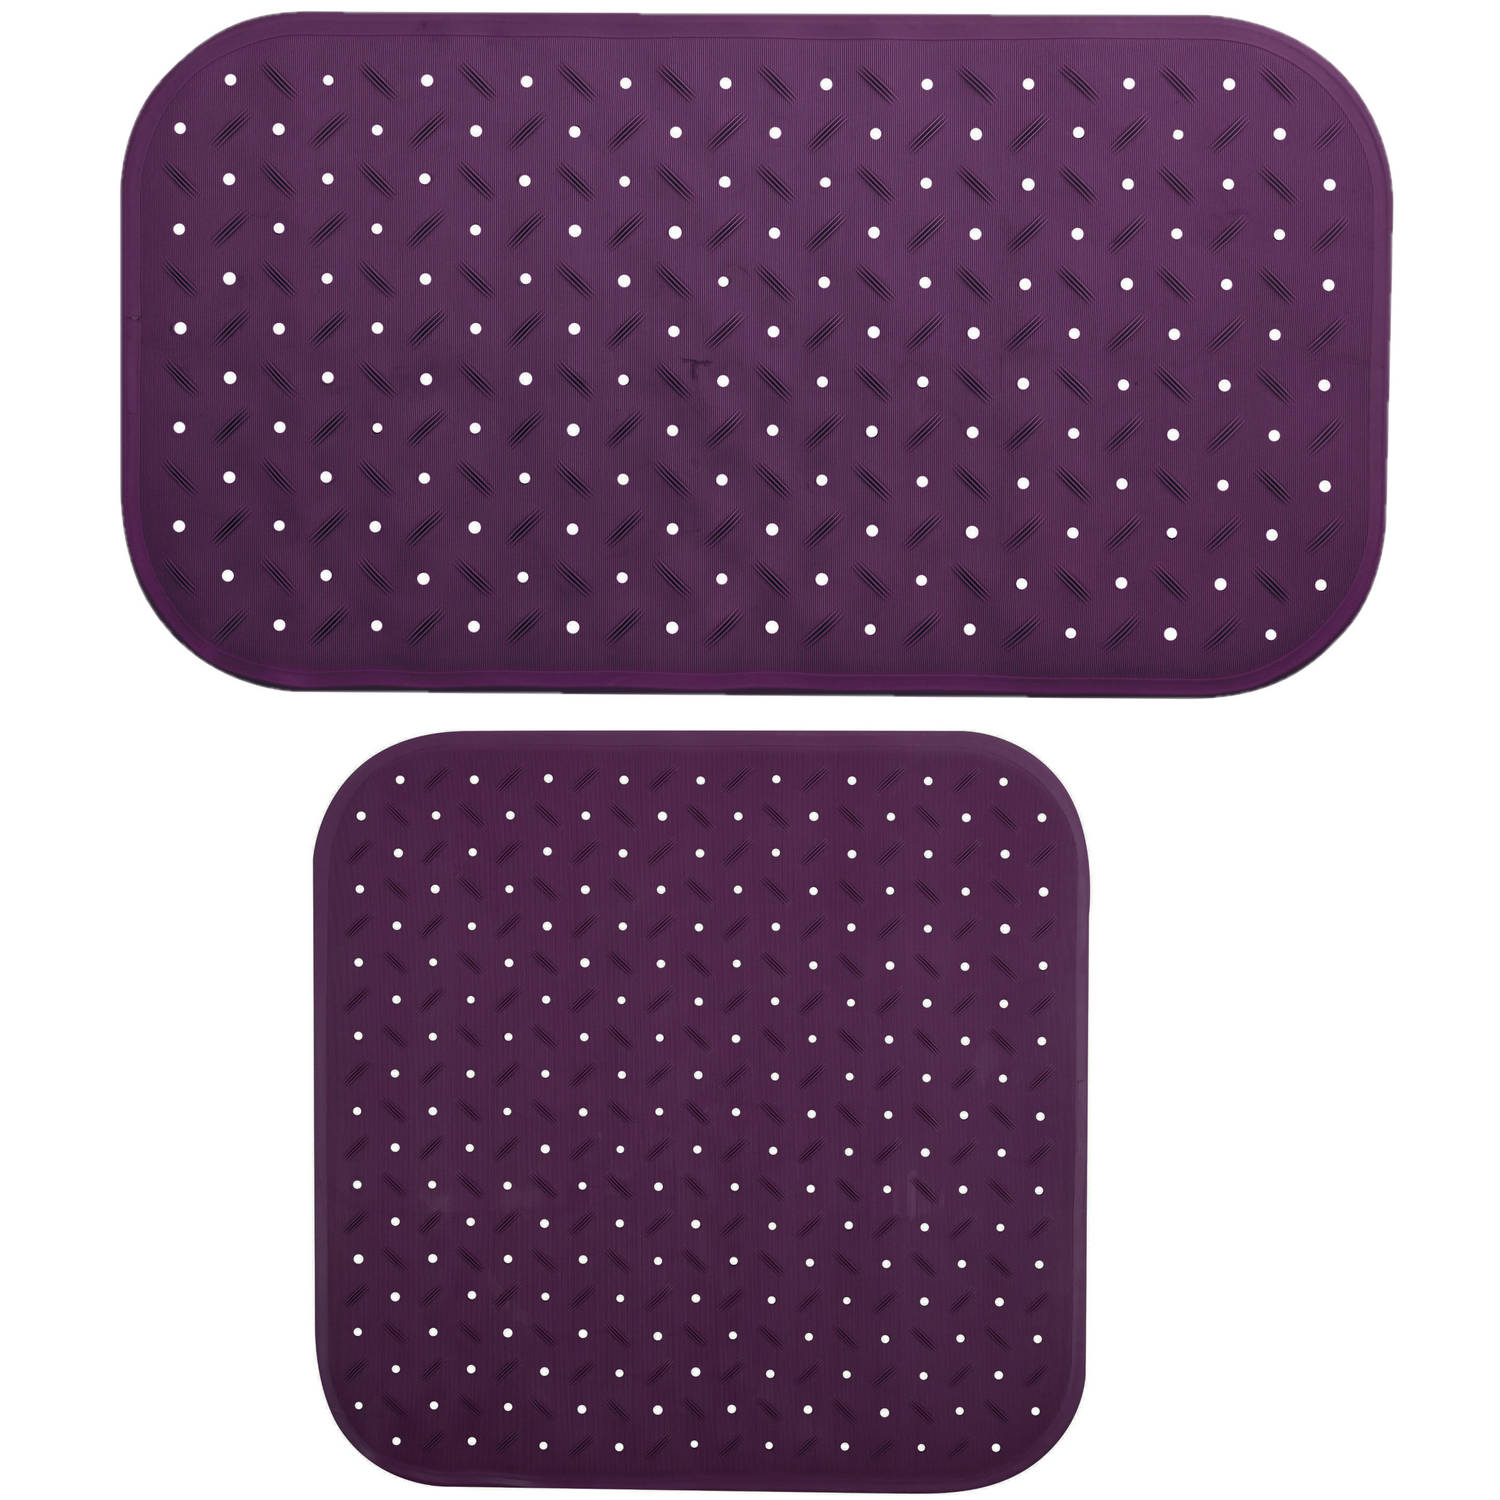 MSV Douche-bad anti-slip matten set badkamer rubber 2x stuks paars 2 formaten Badmatjes